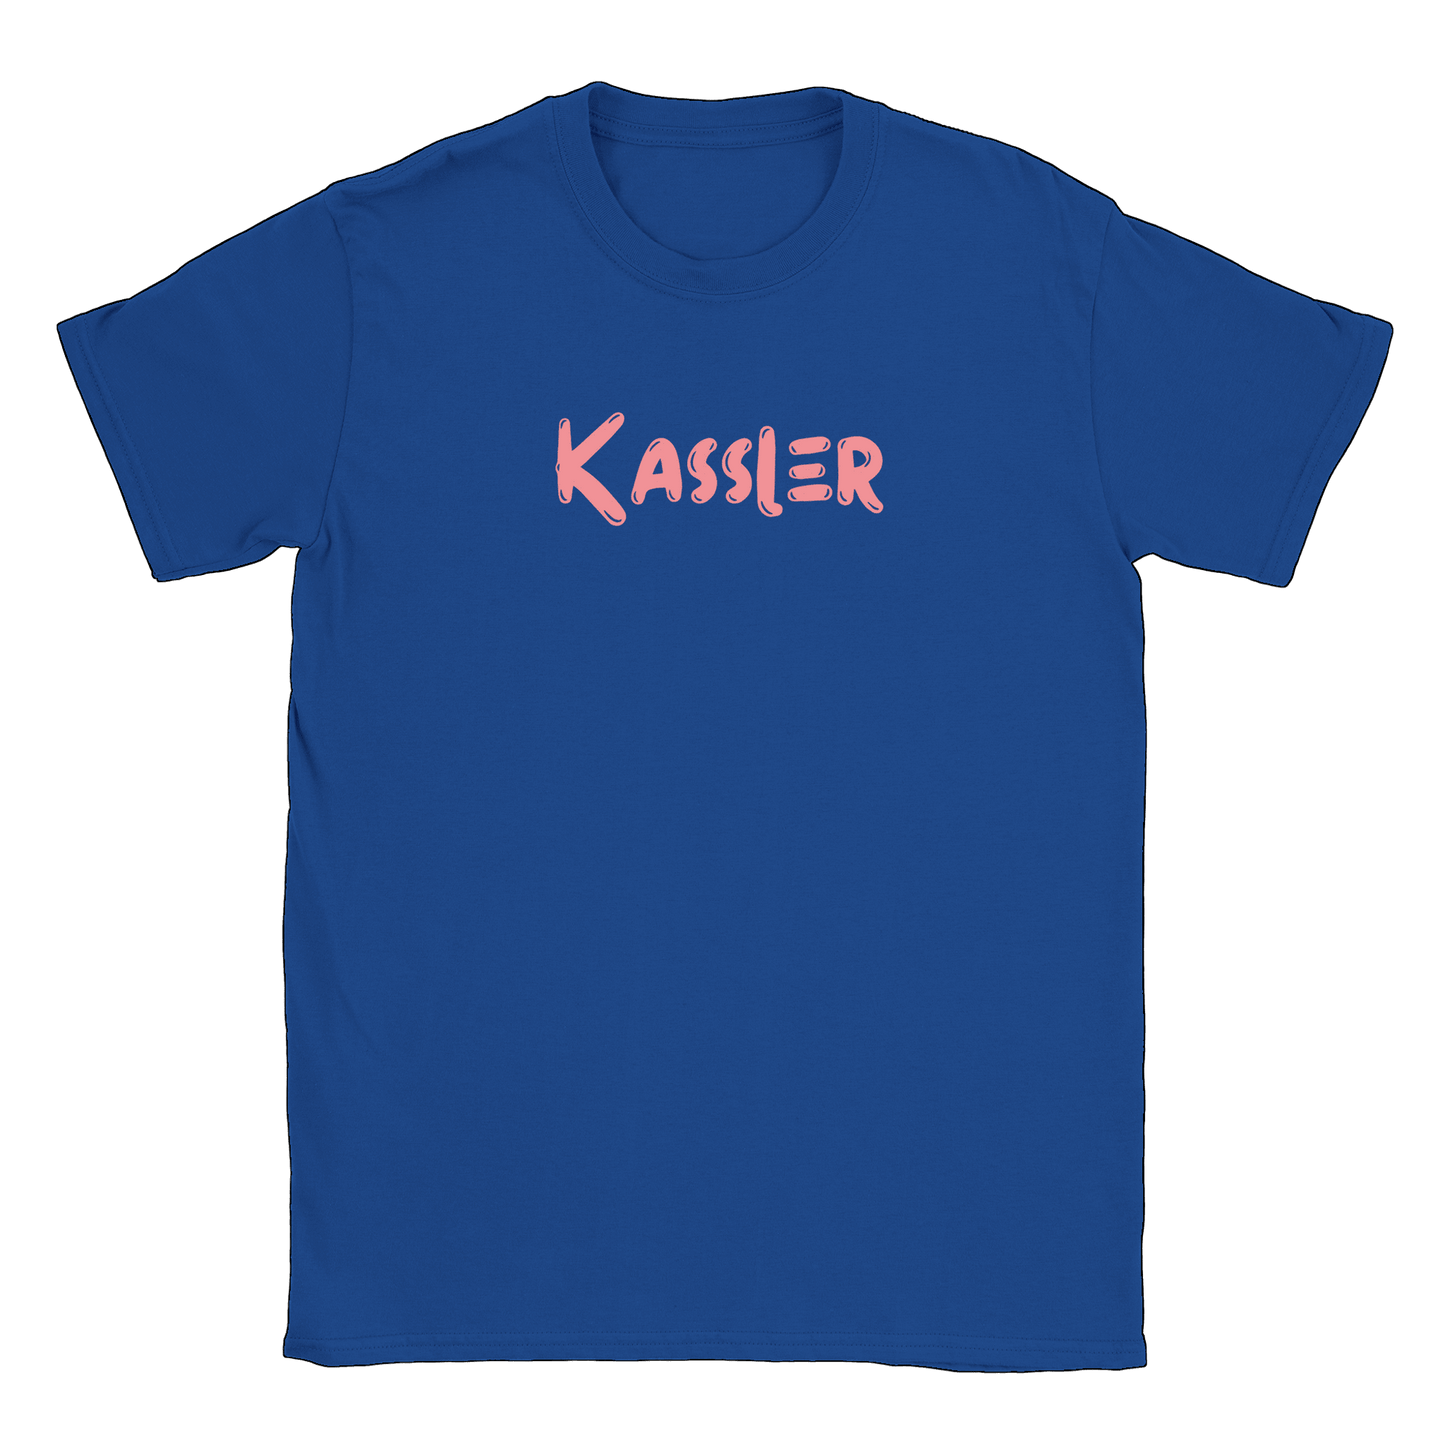 Kassler - T-shirt Royal